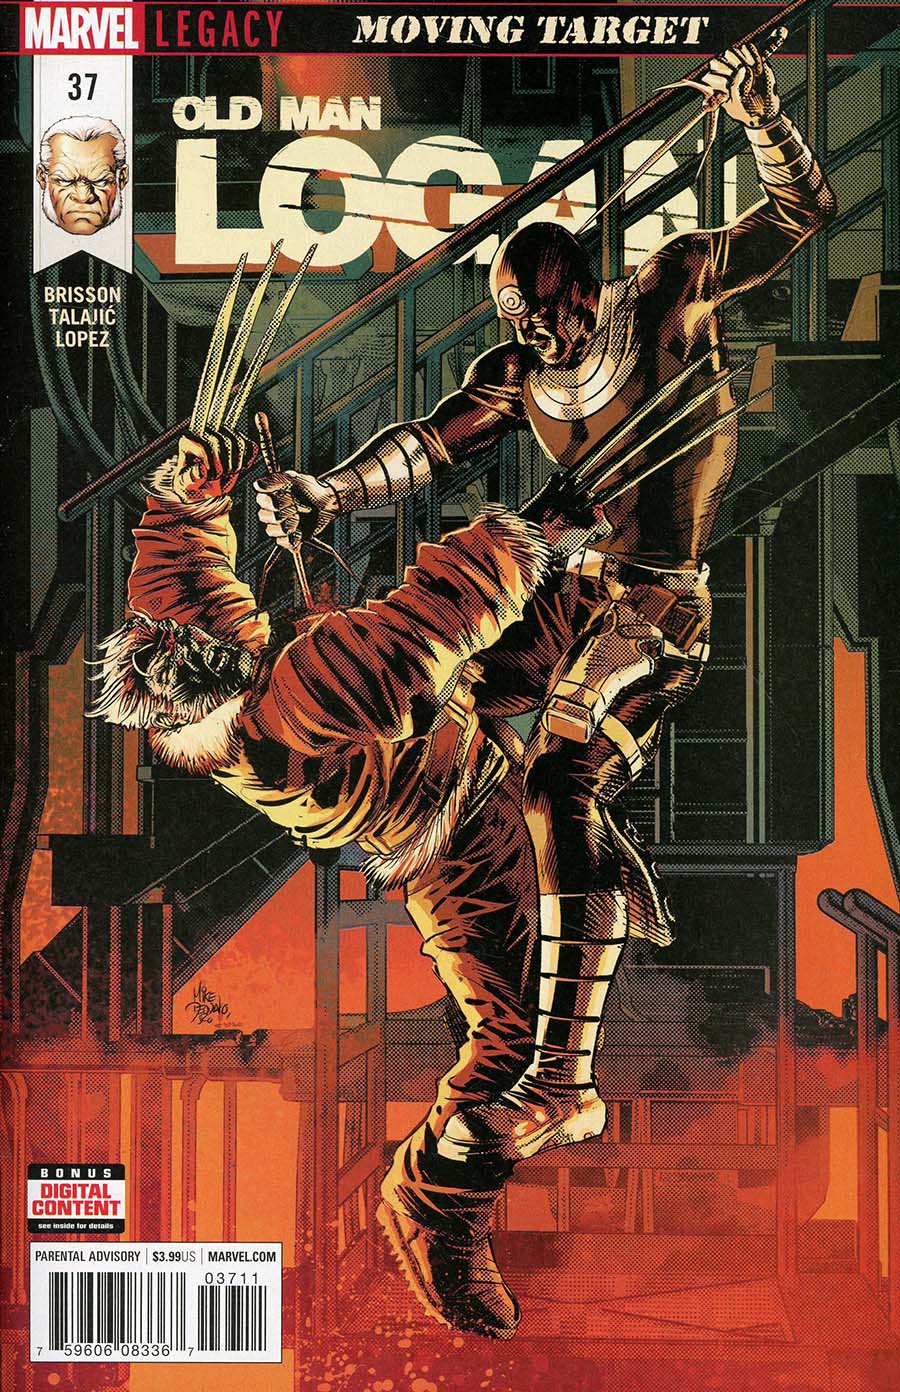 Old Man Logan Vol 2 #37 (Marvel Legacy Tie-In)